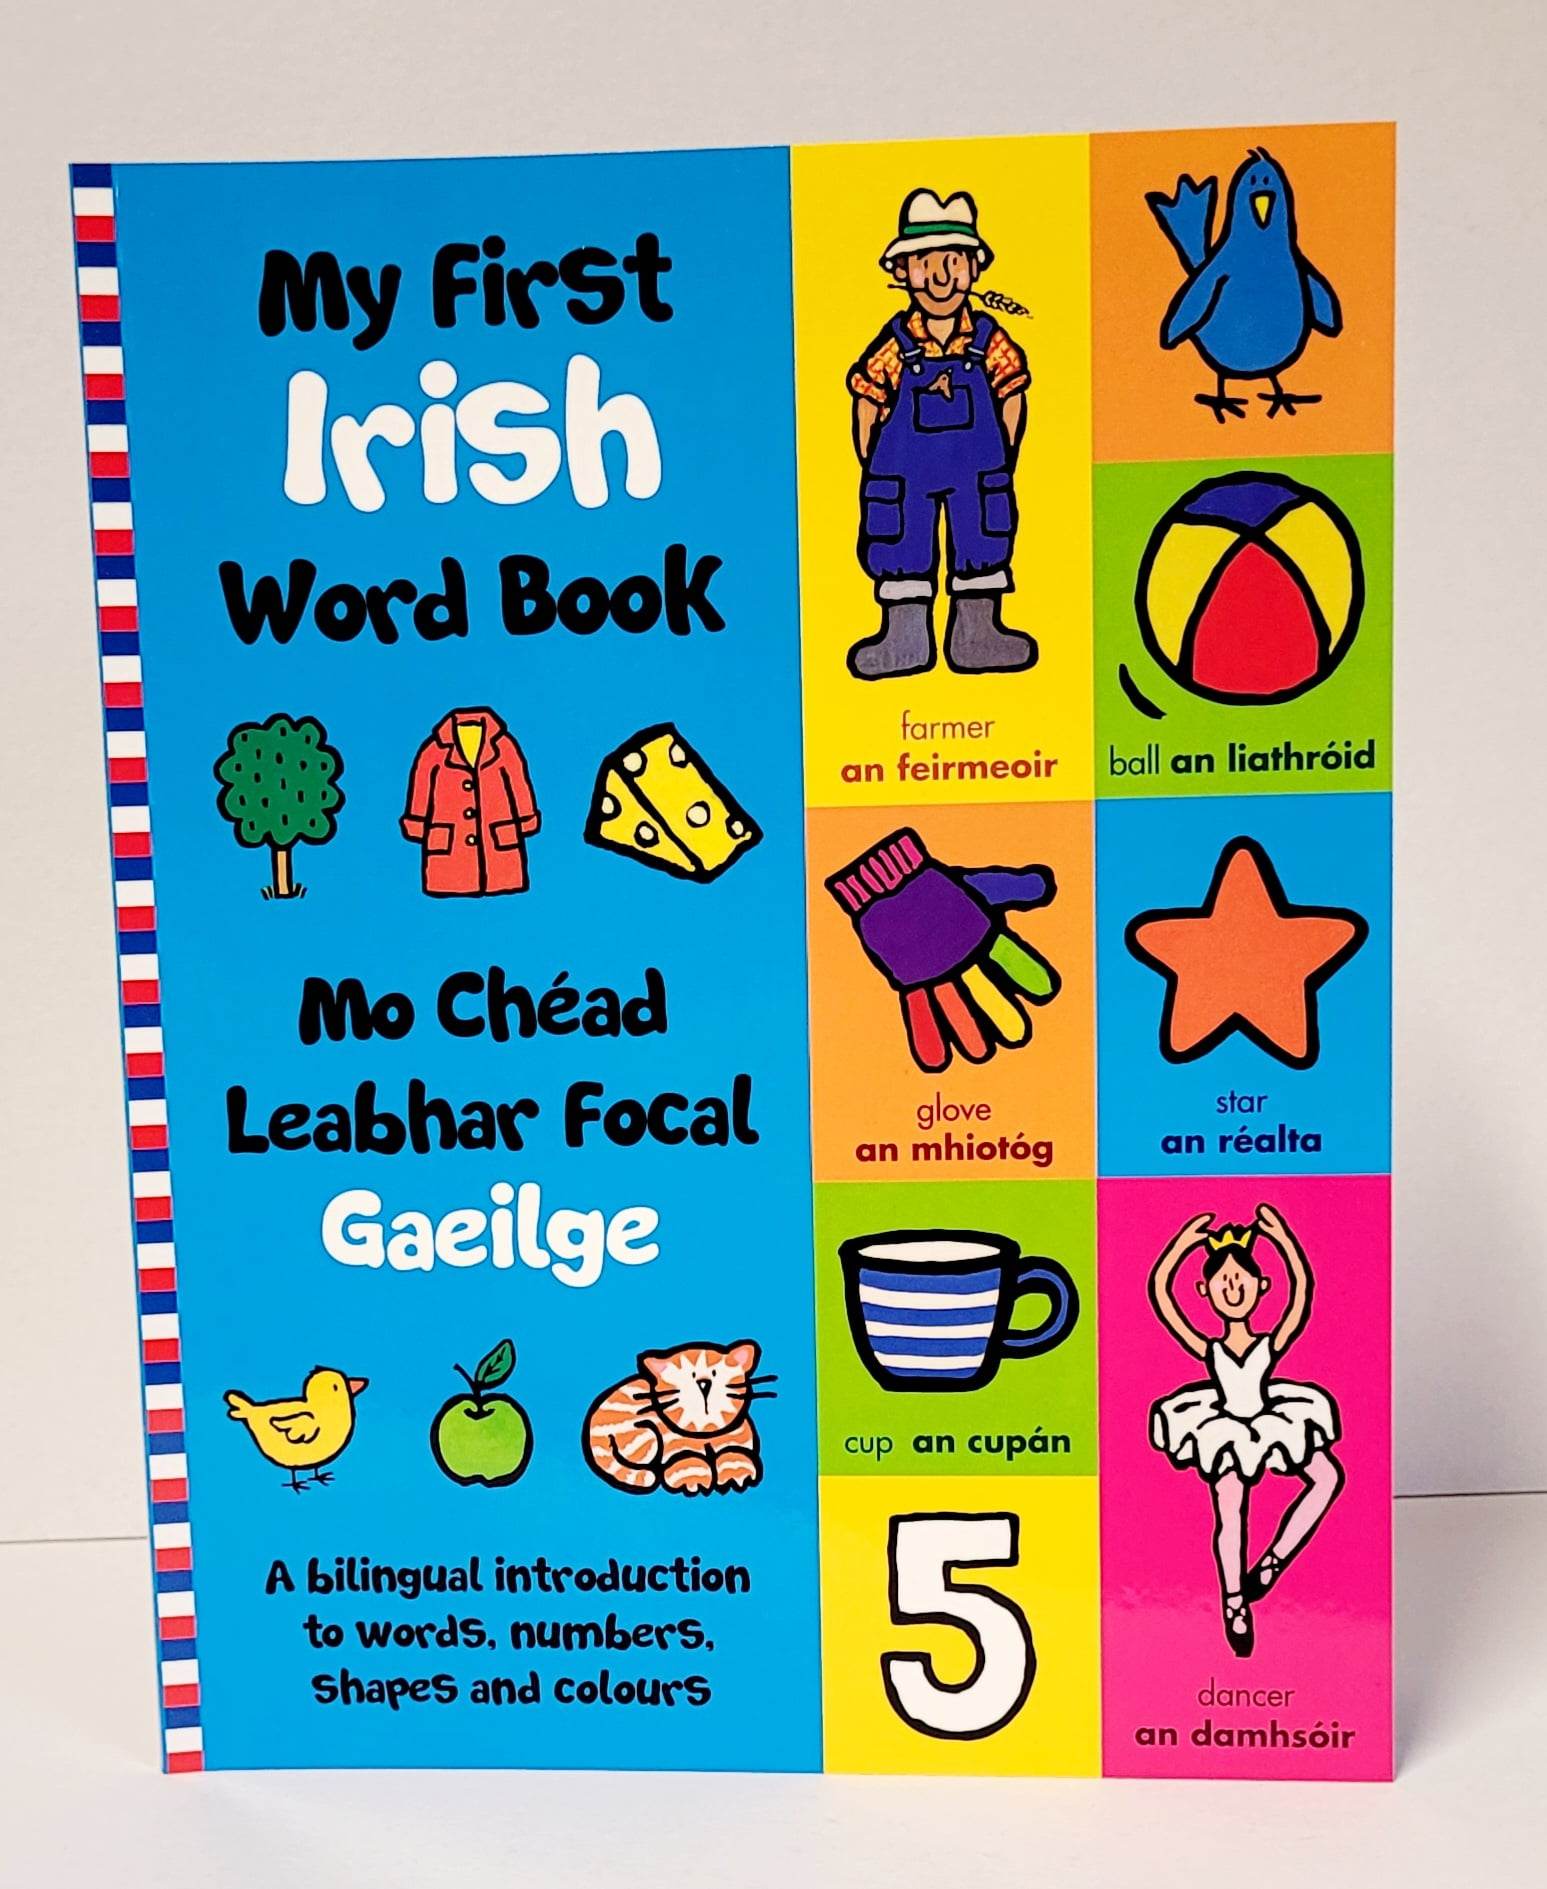 My First Irish Word Book ( Mo Chéad Leabhar Focal Gaeilge)